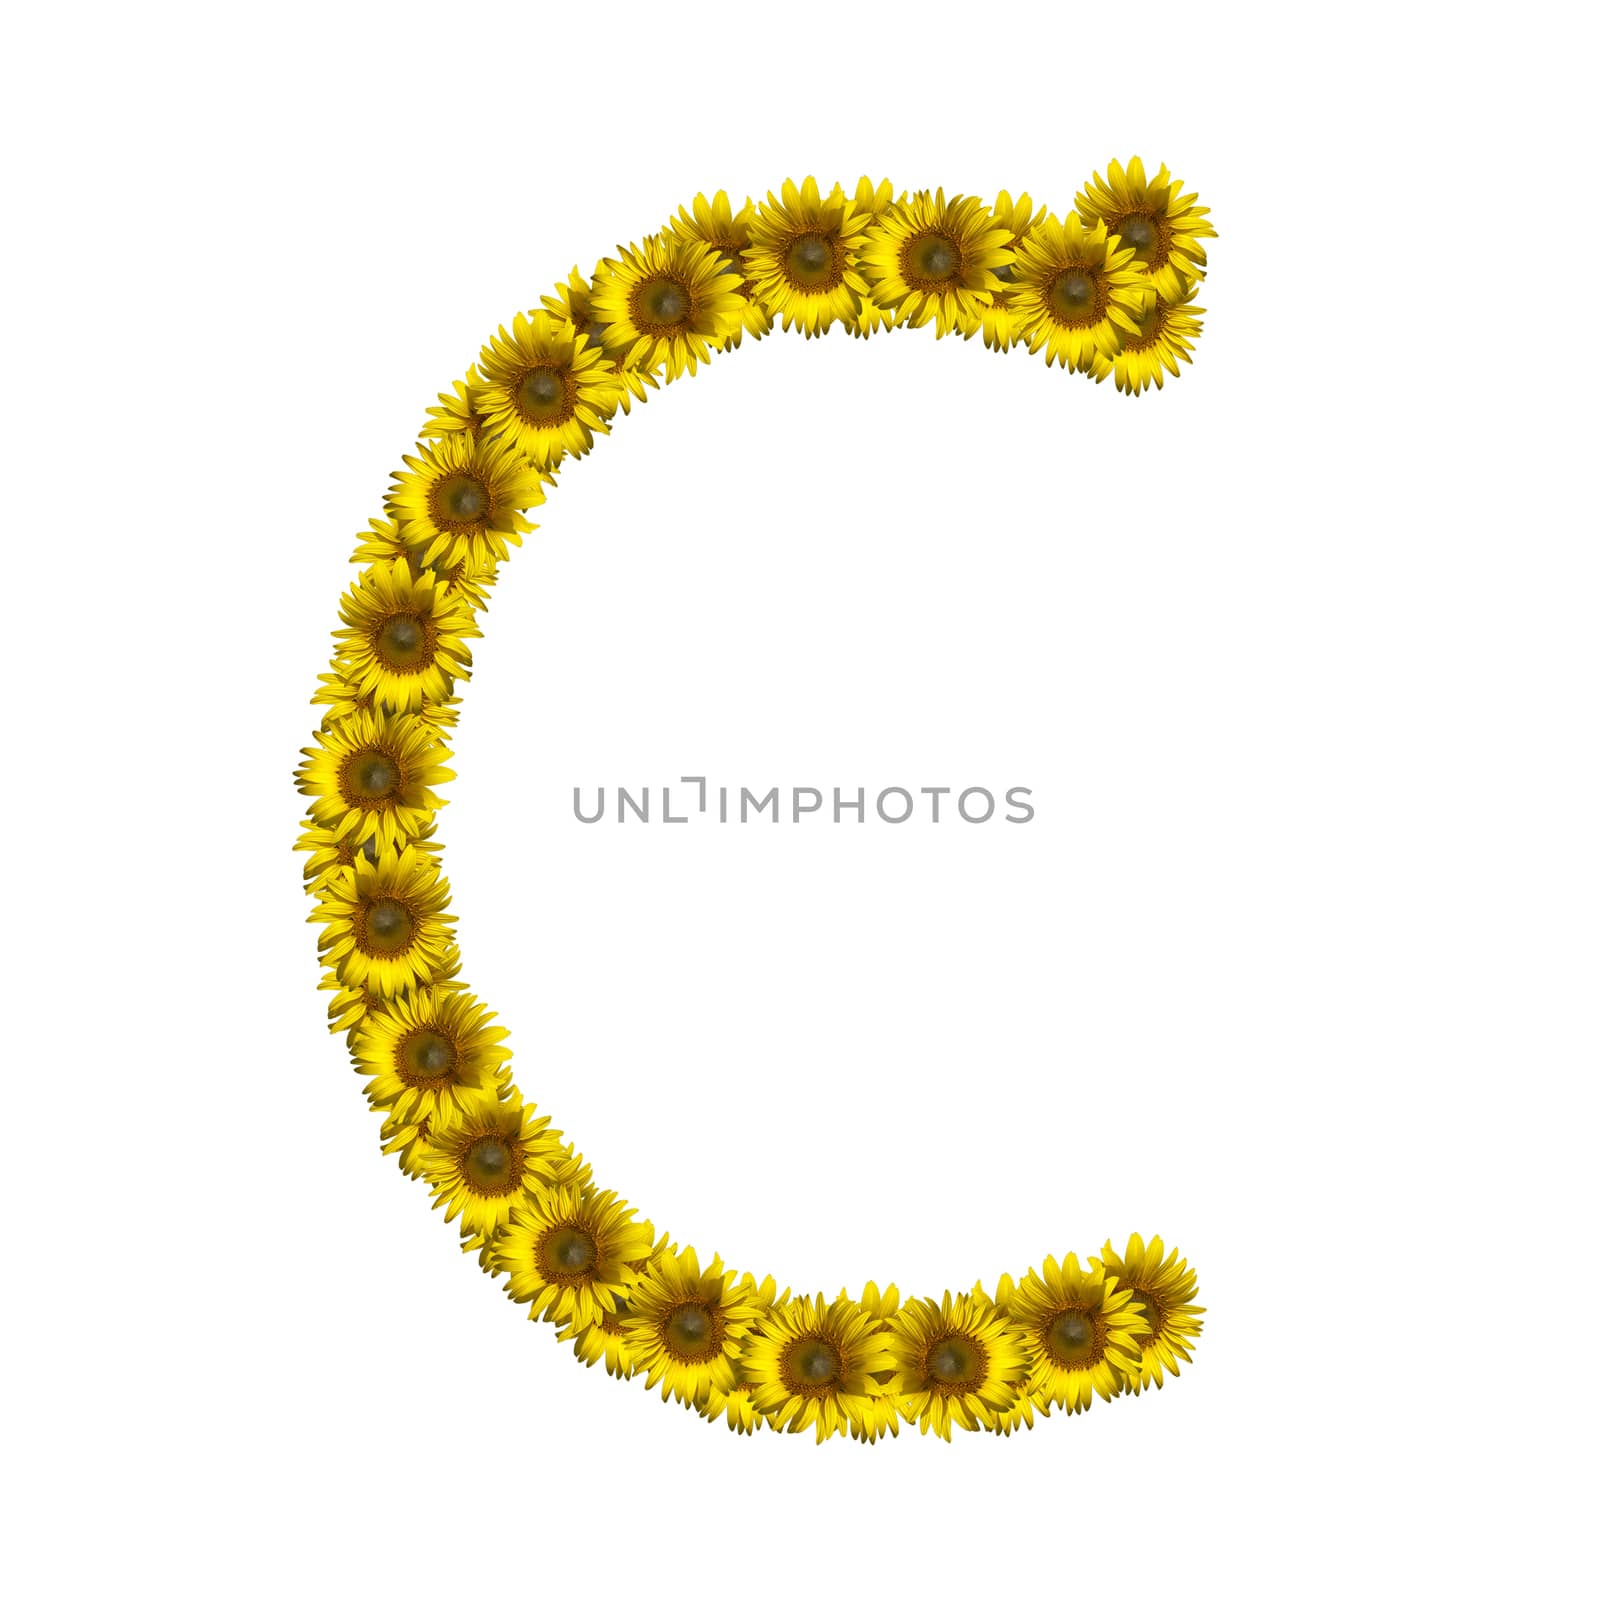 Sunflower alphabet isolated on white background, letter C